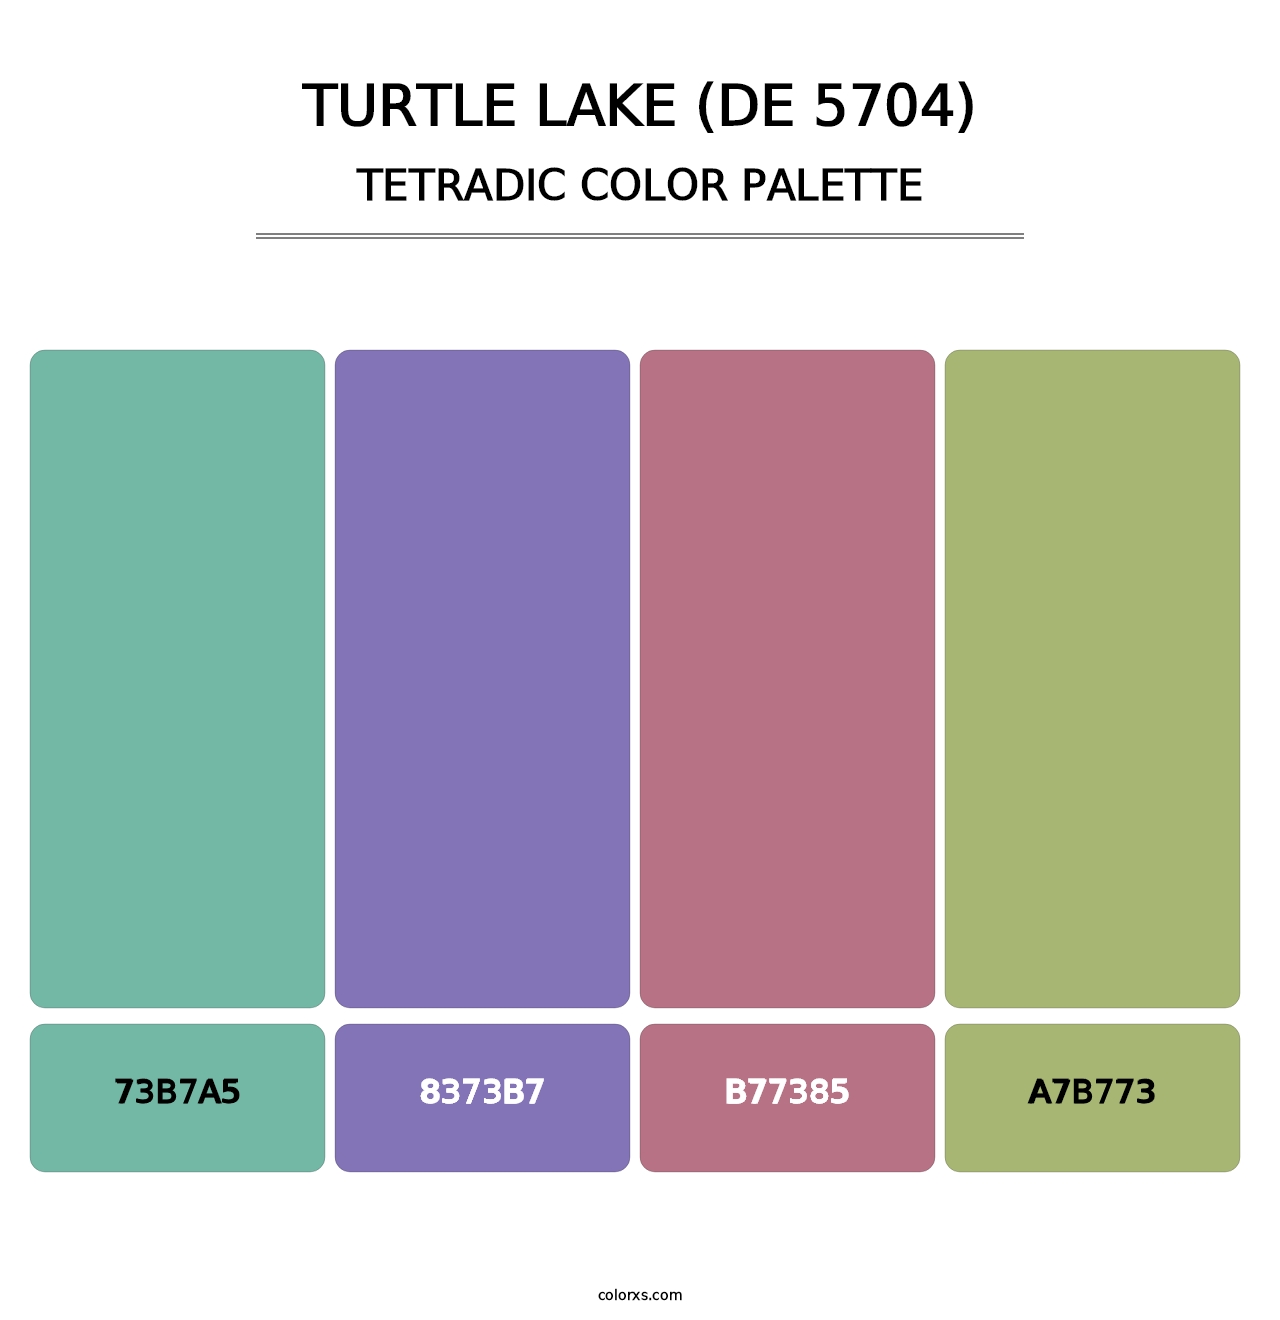 Turtle Lake (DE 5704) - Tetradic Color Palette